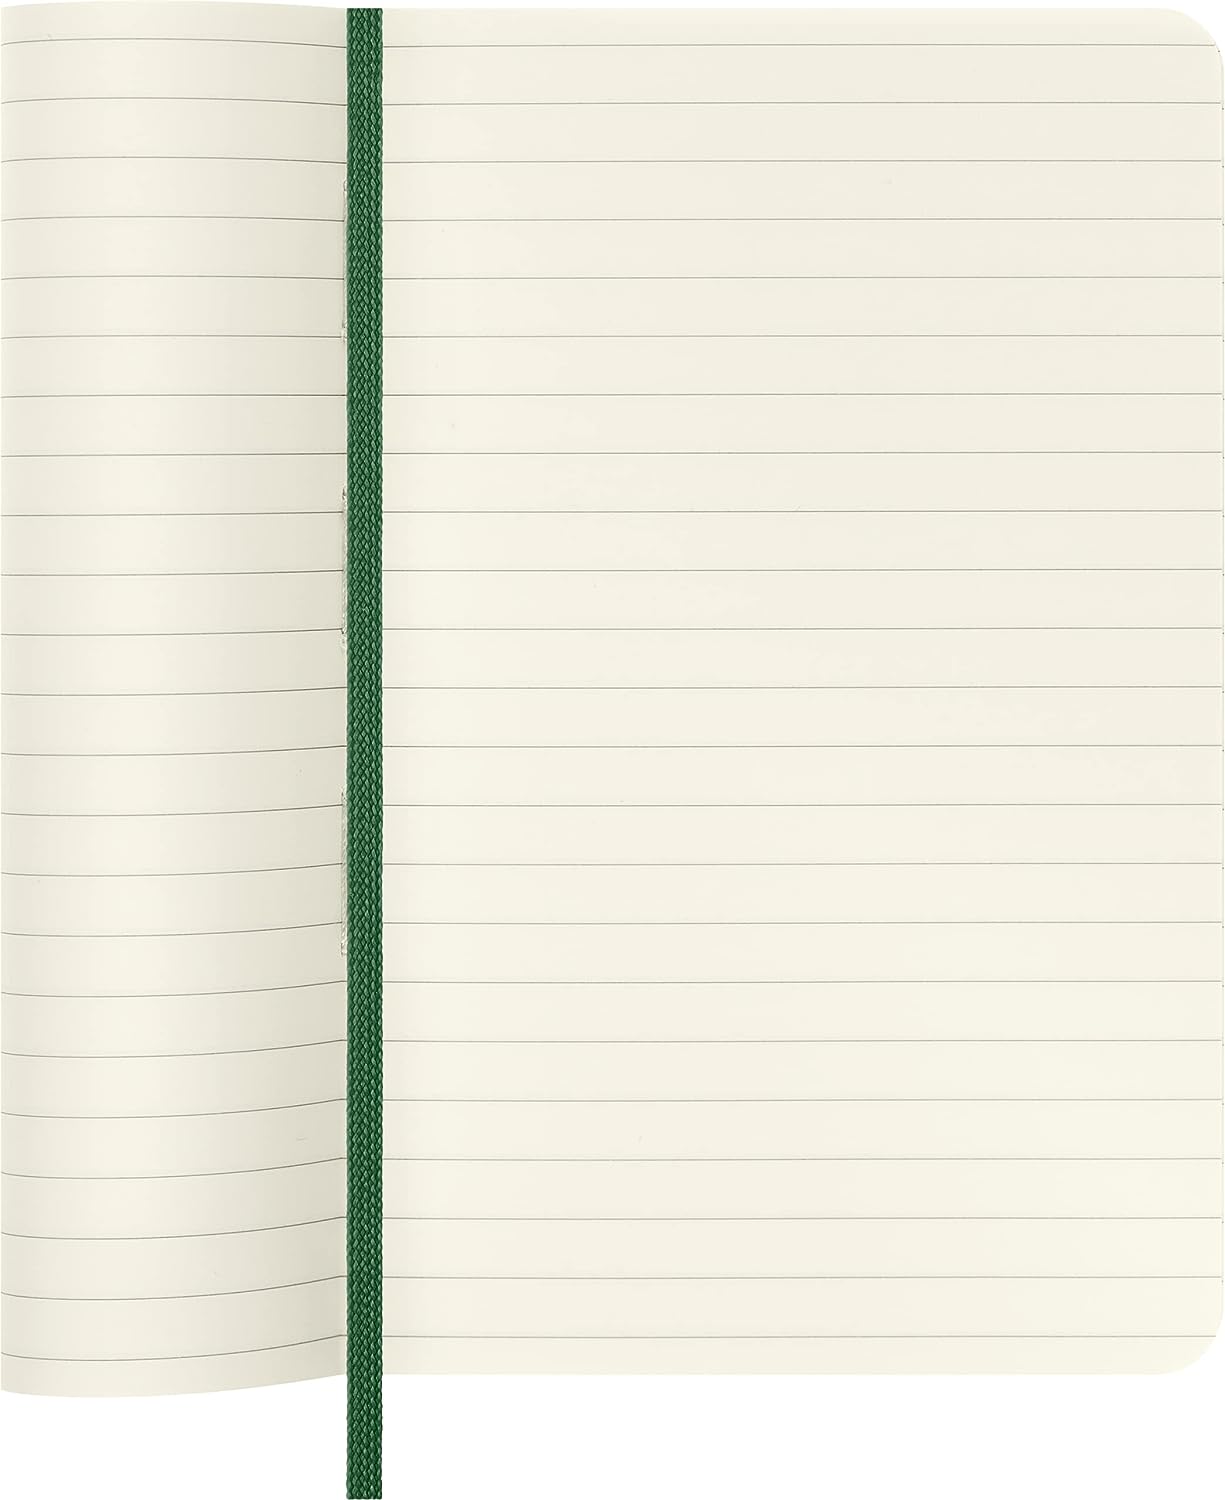 ruled-lined-pocket-soft-cover-notebook-myrtle-green